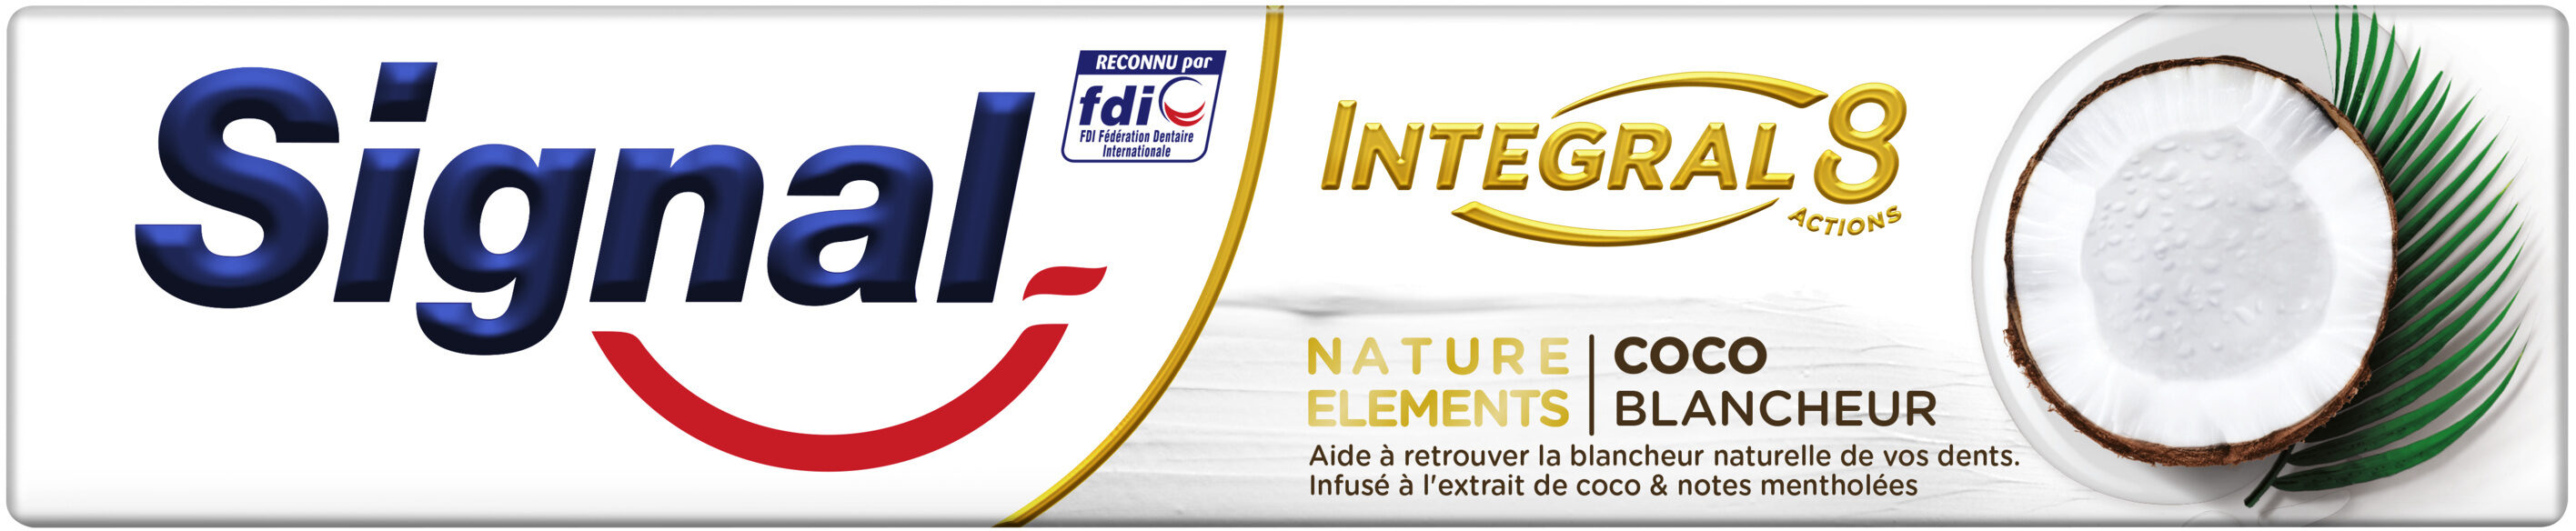 Signal Integral 8 Dentifrice Blancheur Nature Elements Coco Blancheur - Produit - fr